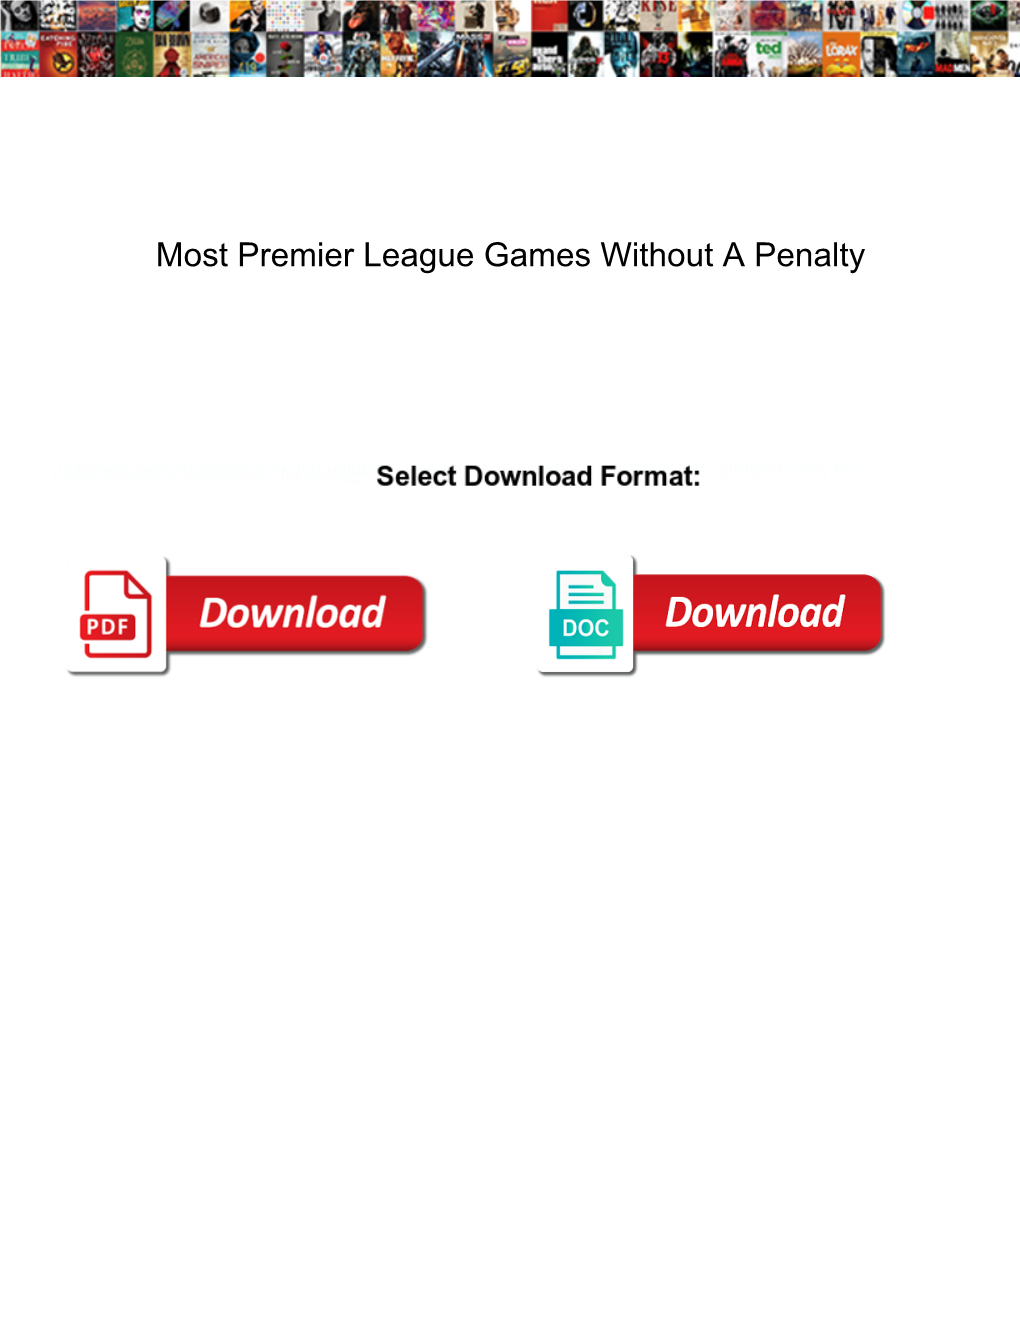 Most Premier League Games Without a Penalty